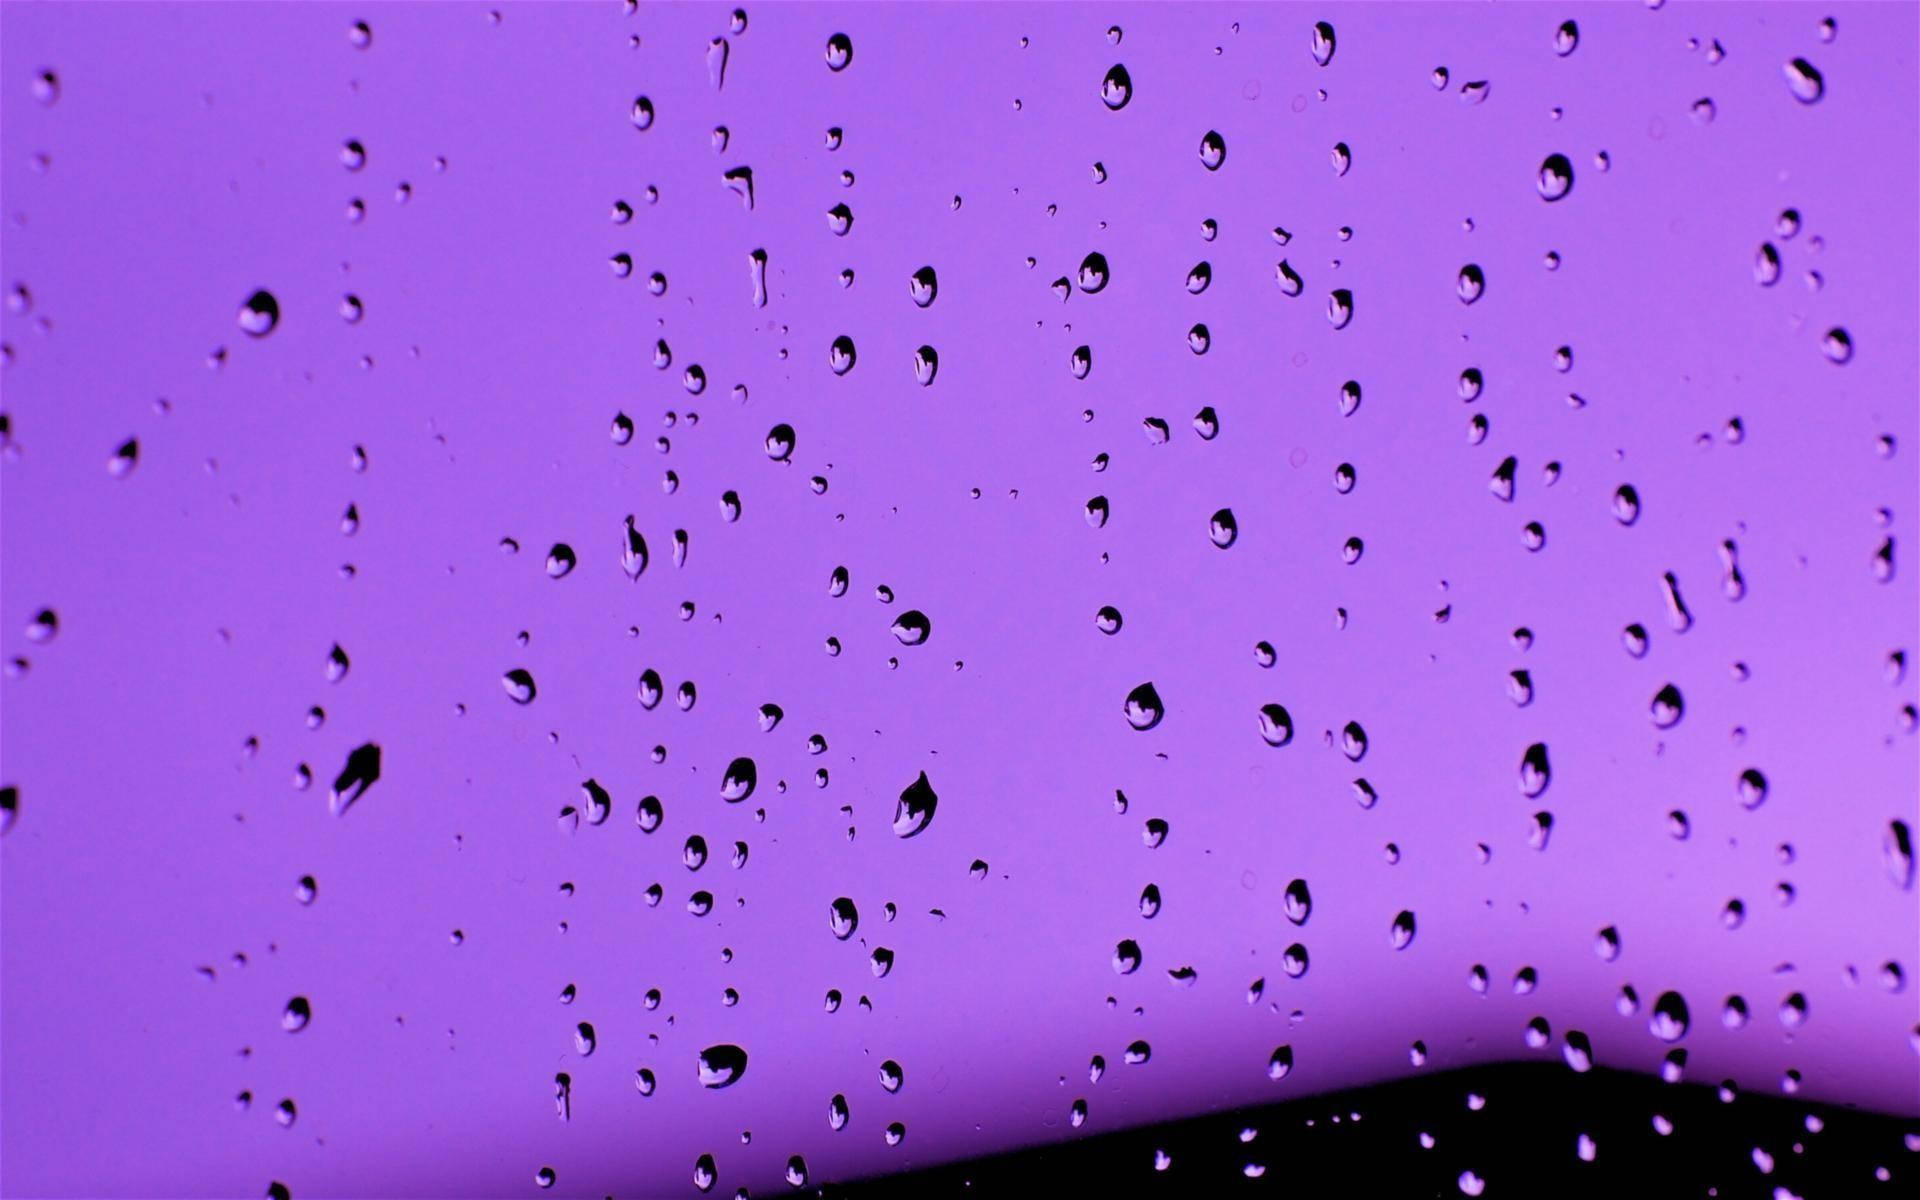 Droplets On Window With Light Purple Grading Wallpaper